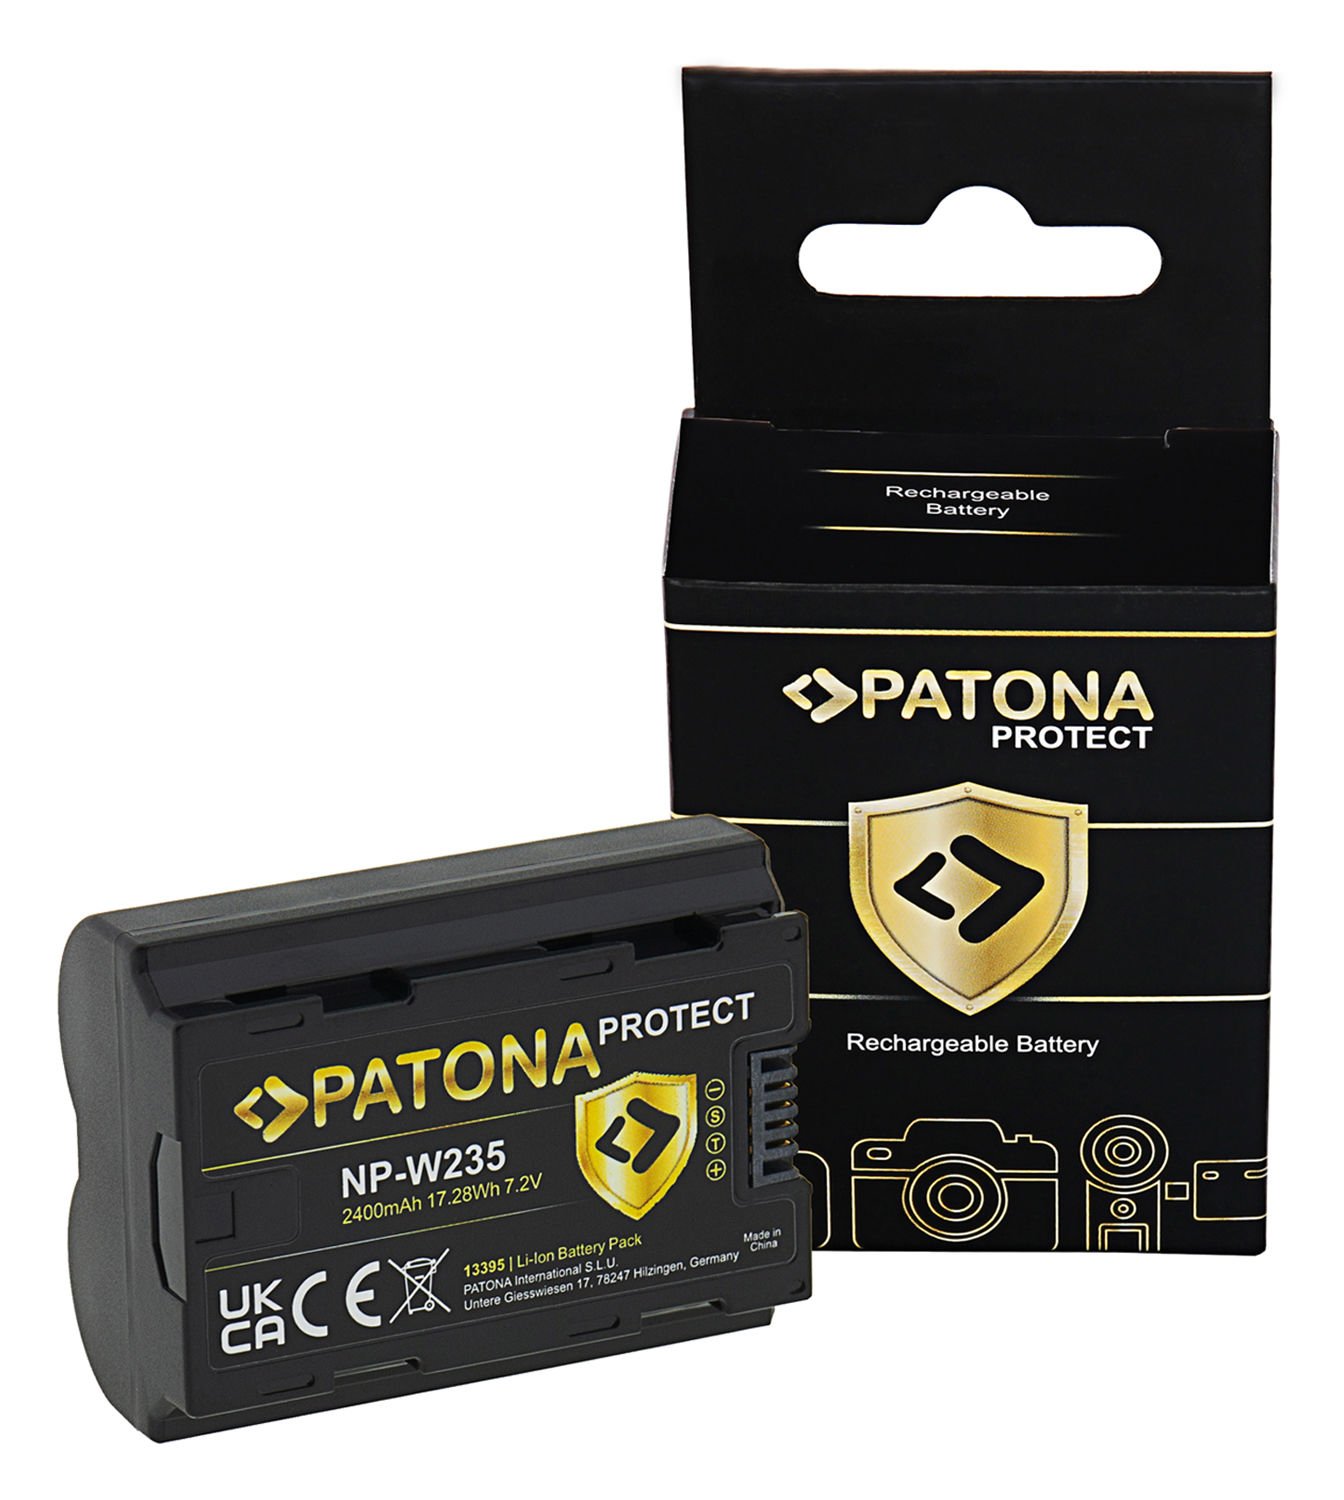 Patona  13395 Protect Batarya Fuji NP-W235